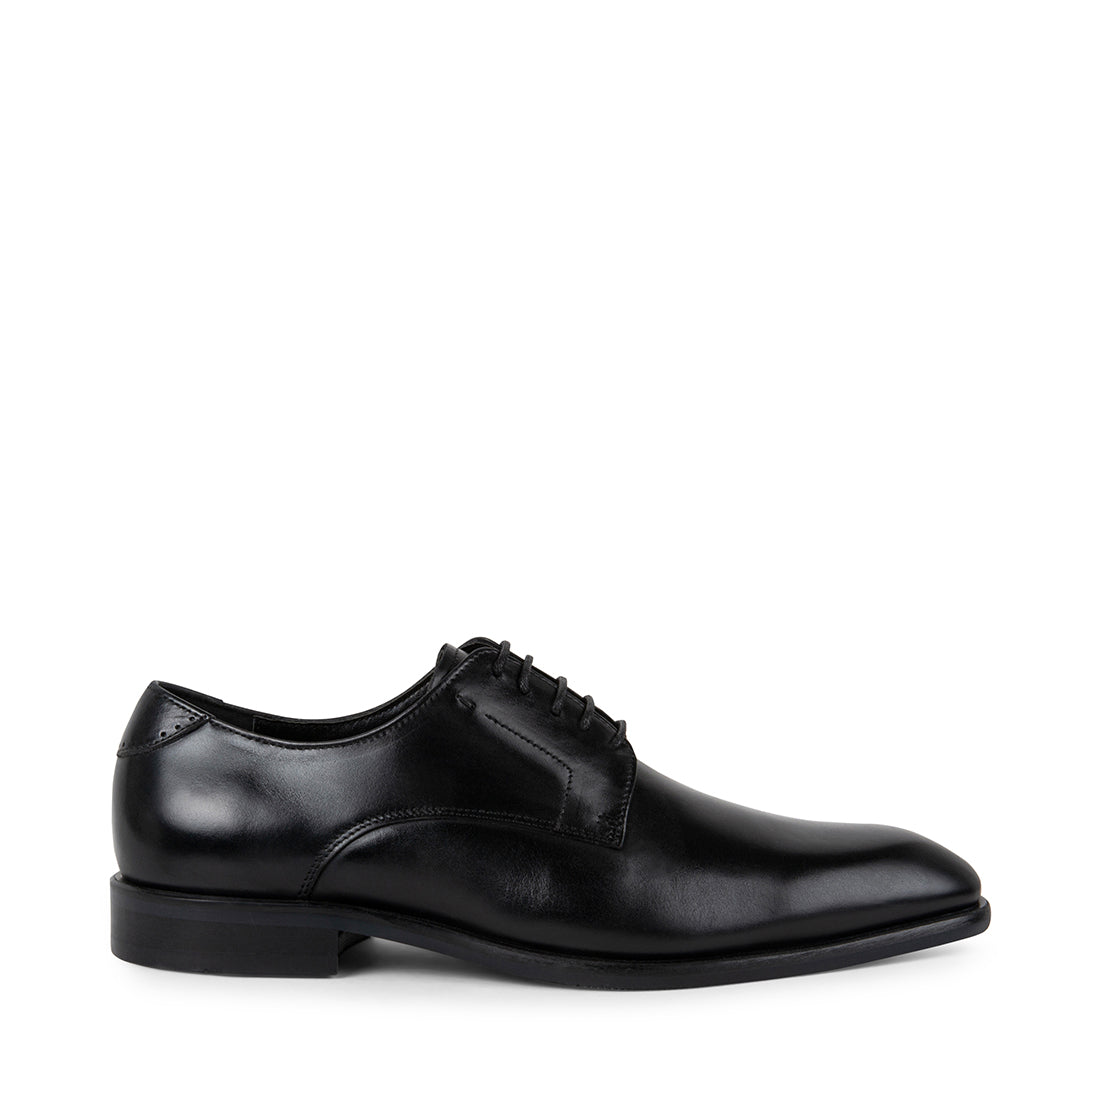 LYRICC Black Leather Men's Dress Shoes | Men's Designer Dress Shoes ...